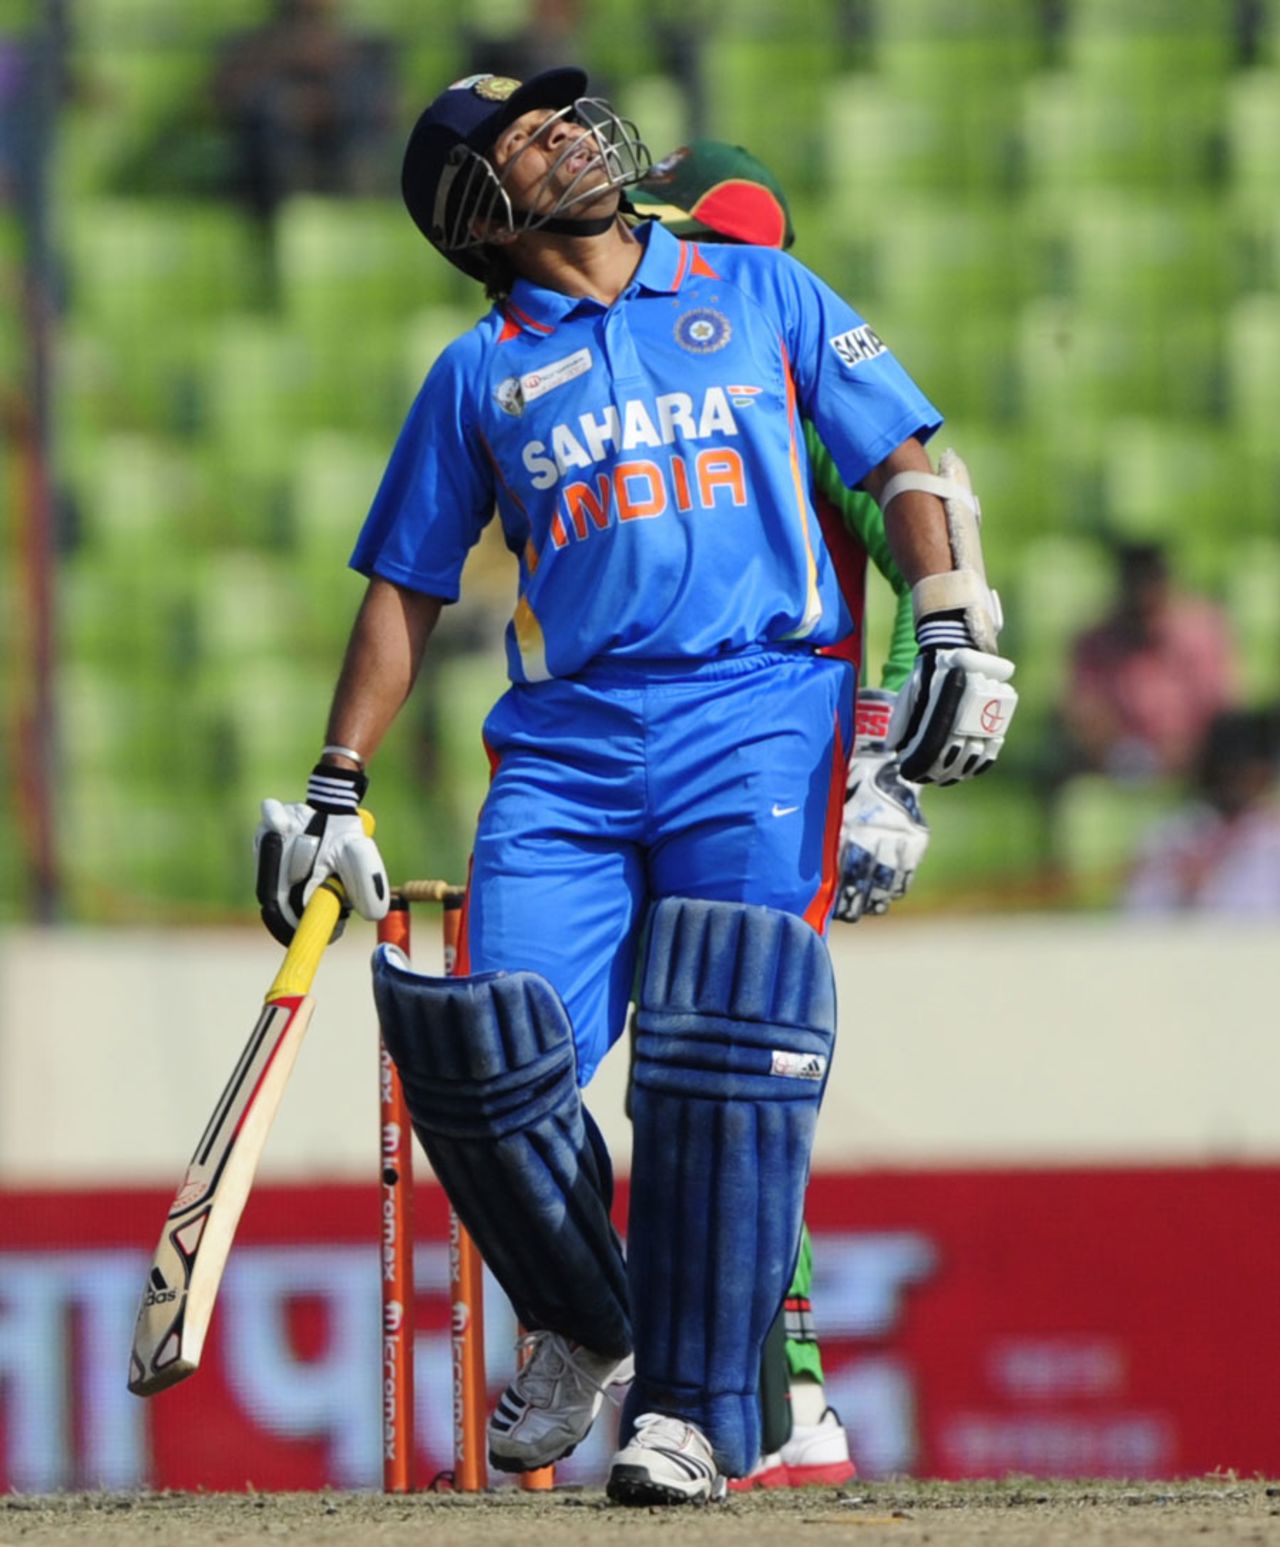 Sachin Tendulkar reacts to reaching his half-century, Bangladesh v India, Asia Cup, Mirpur, March 16, 2012